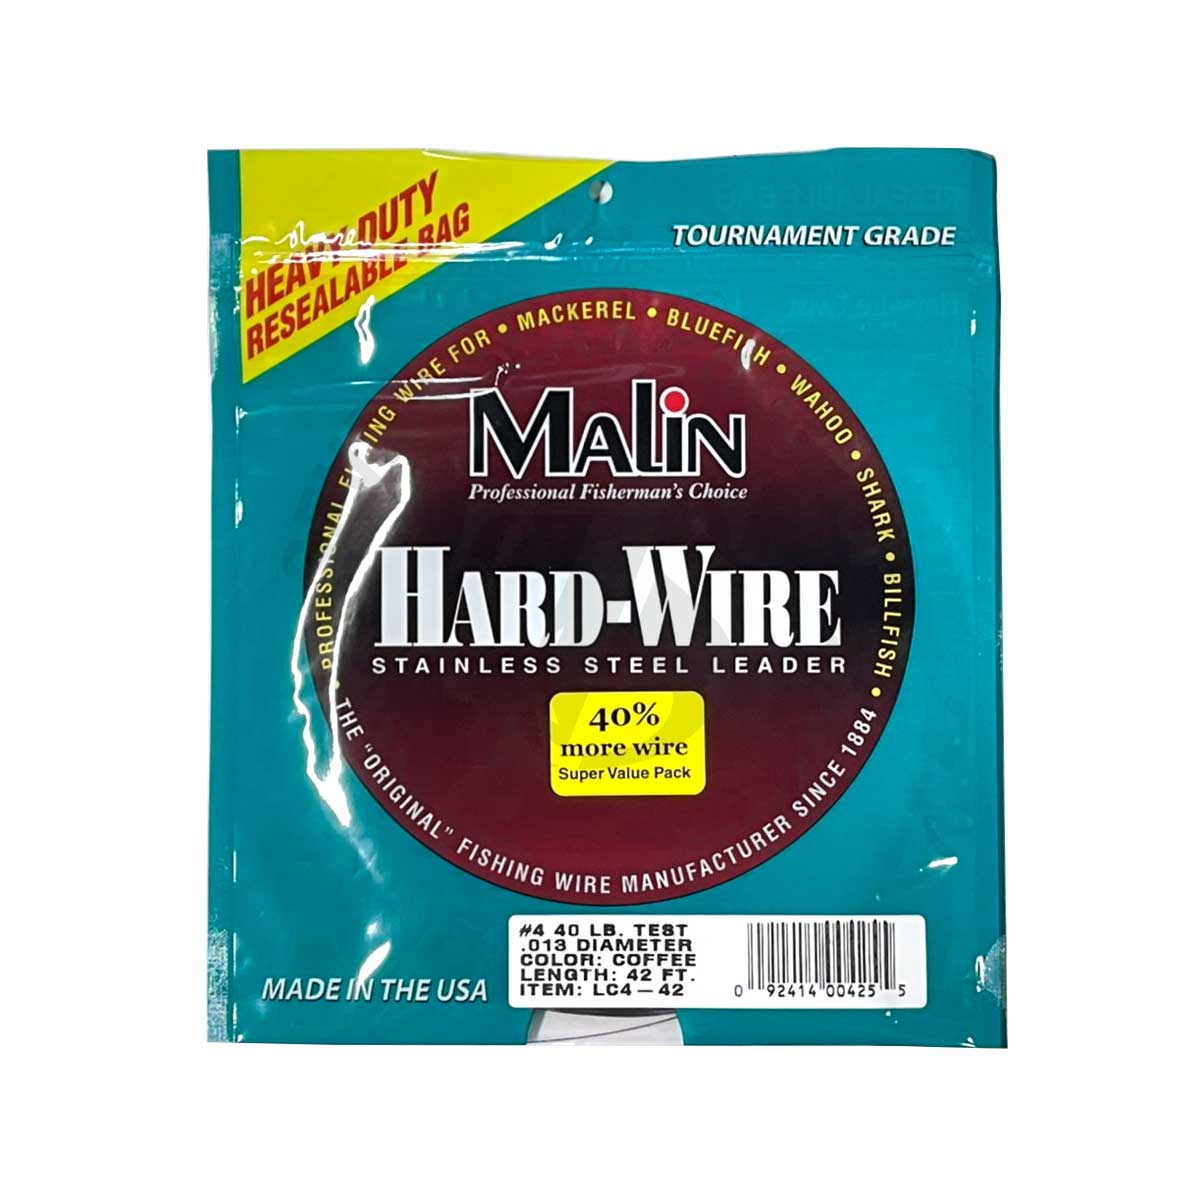 Malin Hard-Wire Stainless Steel Leader #4-40lb (Coffee)*สายลีดลวดสแตนเลส -  7 SEAS PROSHOP (THAILAND)